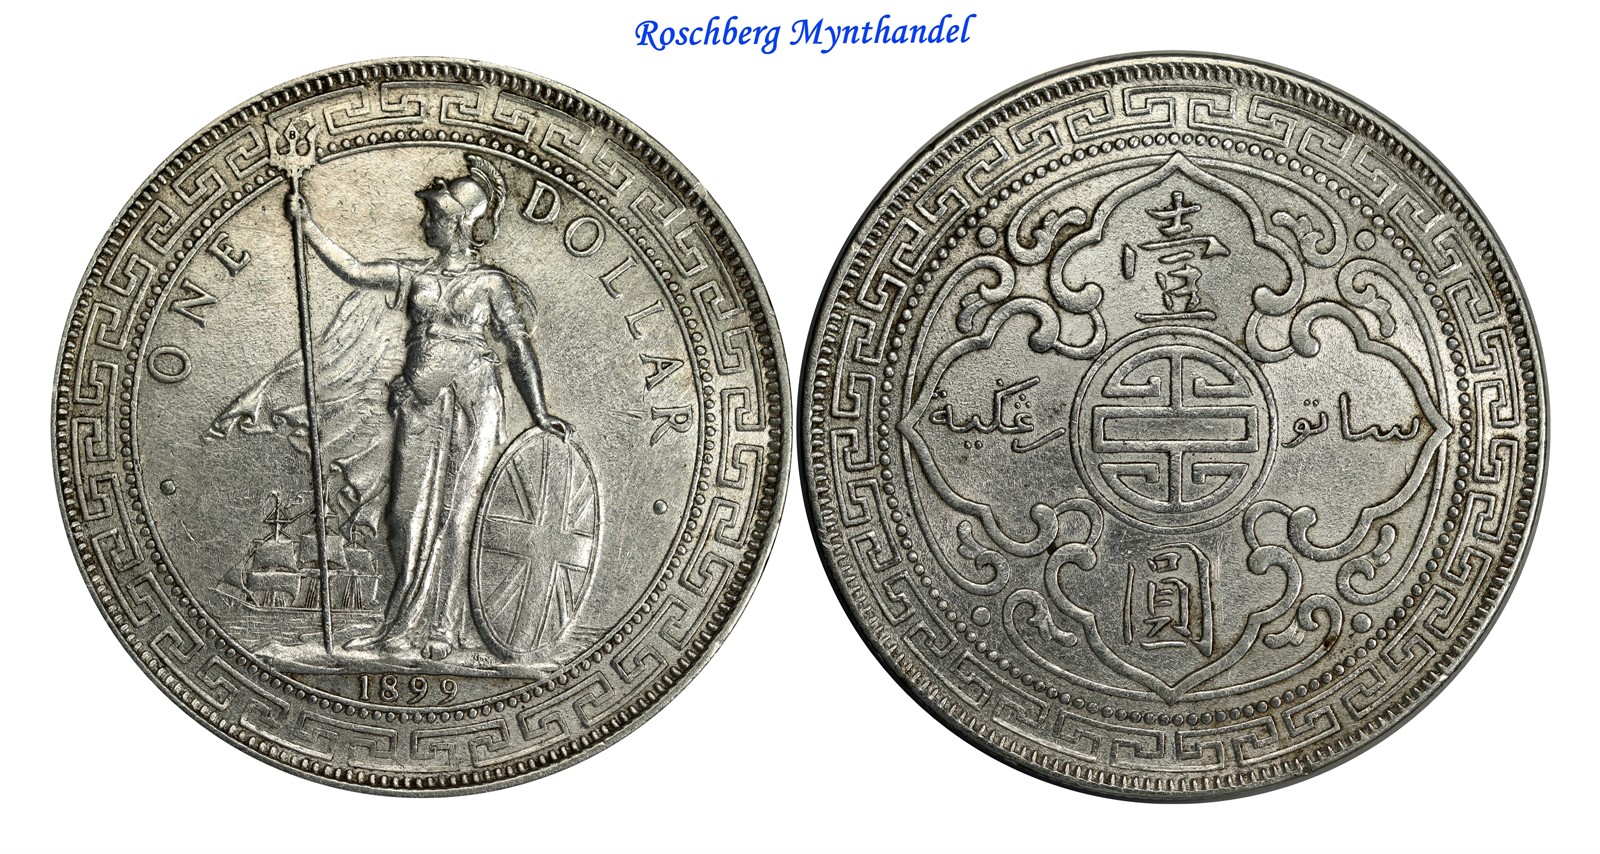 GREAT BRITAIN. Trade Dollar 1899 B, XF